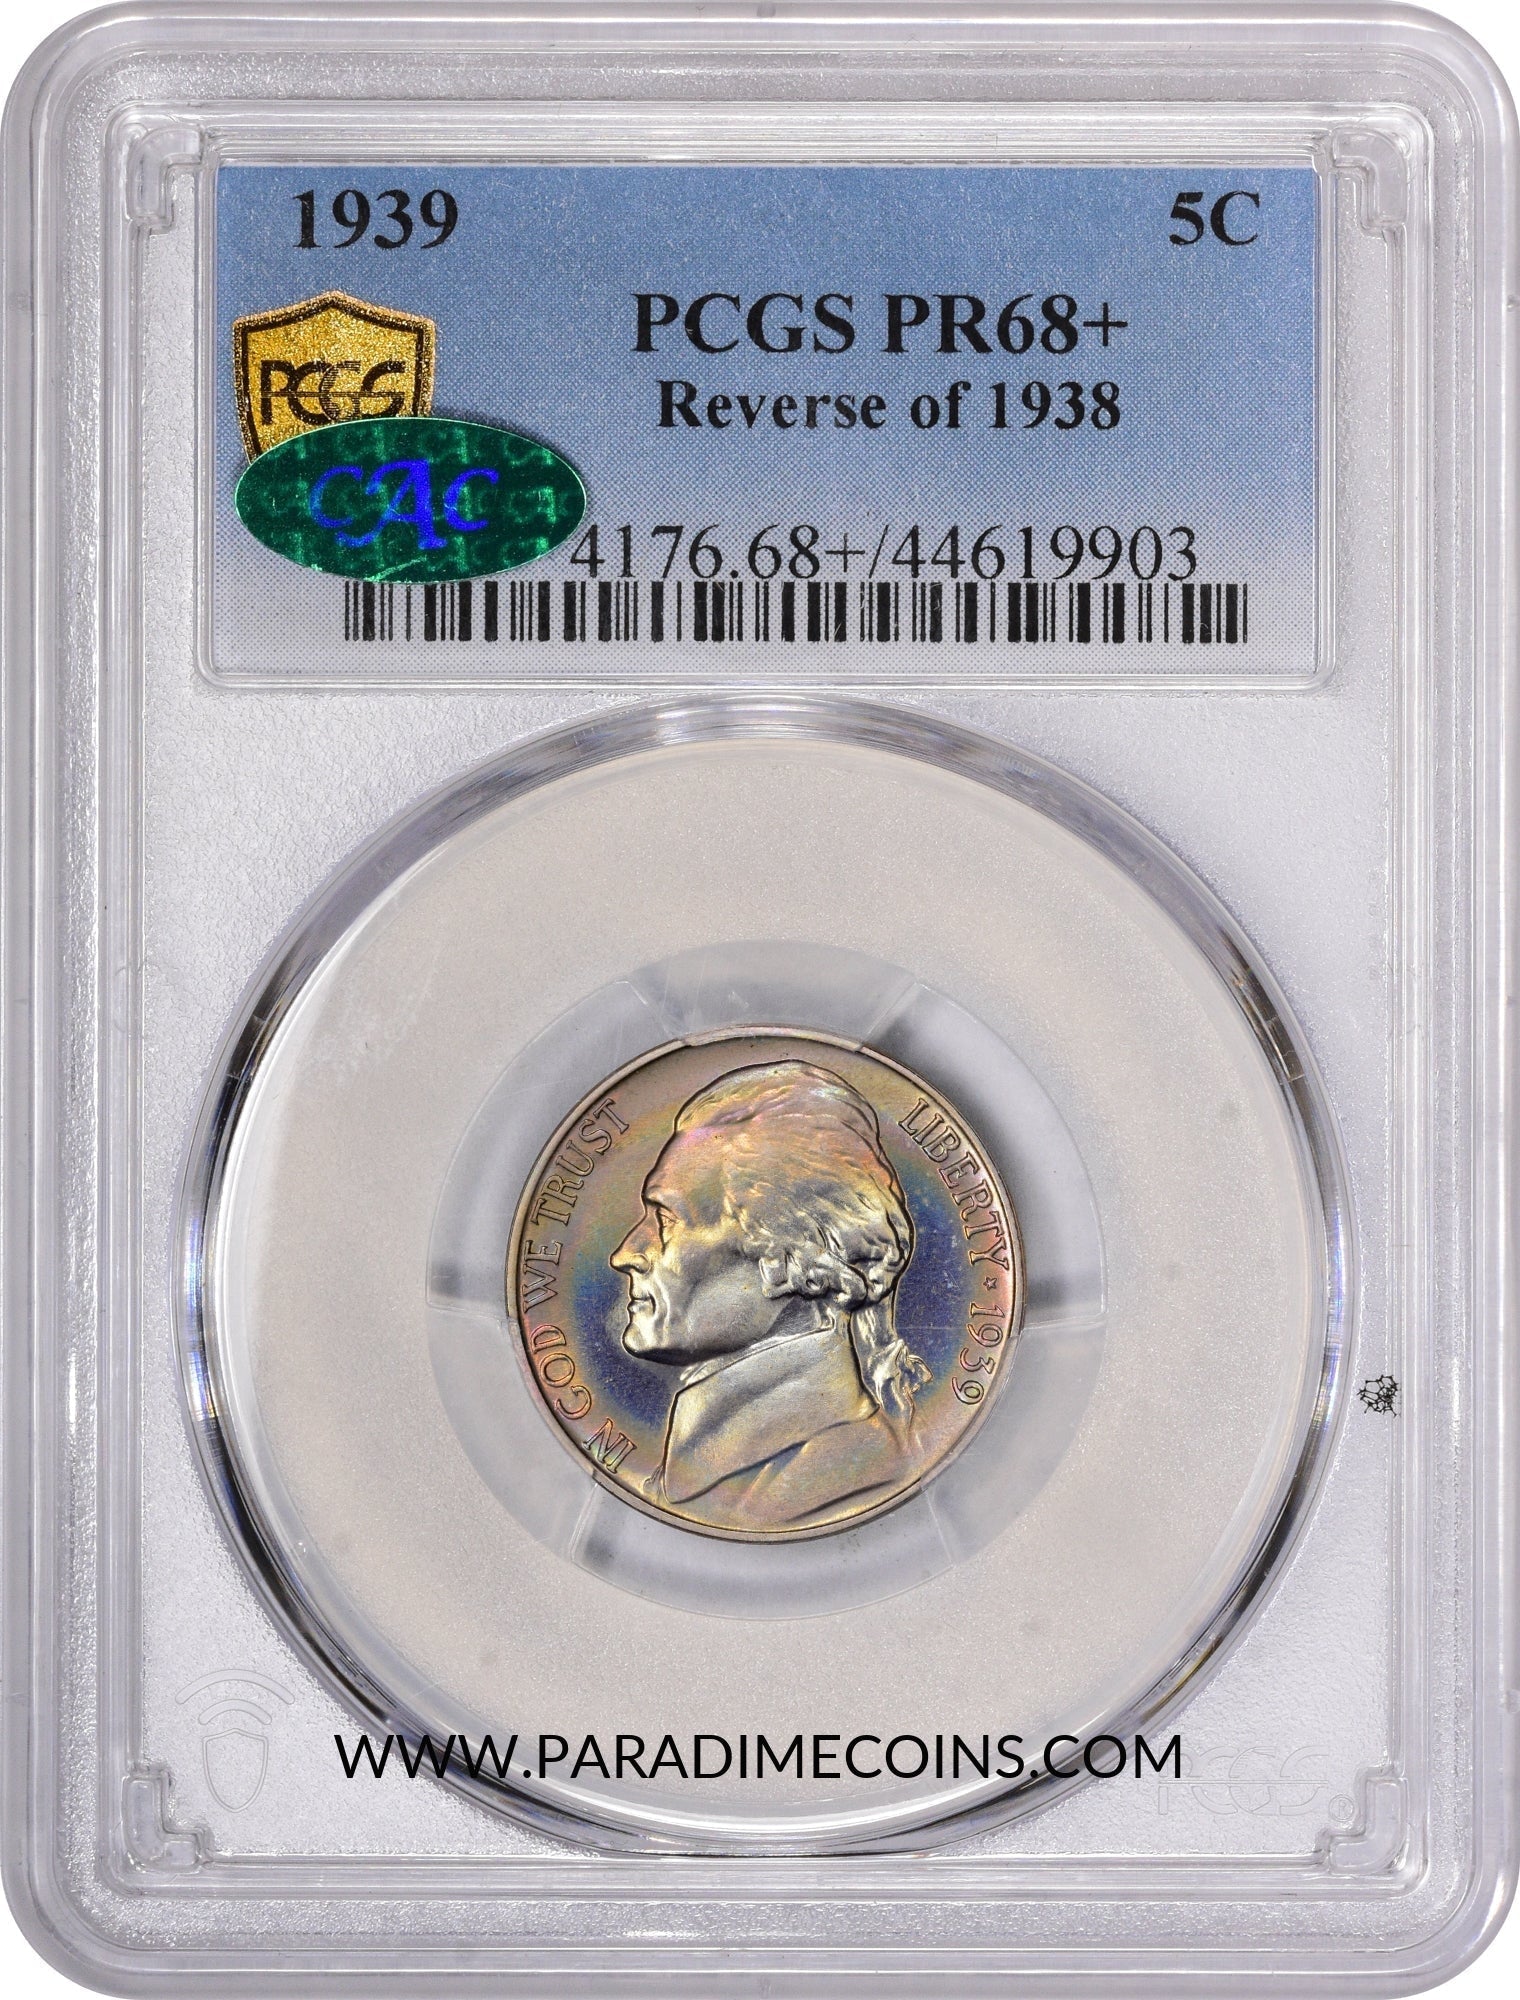 1939 5C REV. OF 38 PR68+ PCGS CAC - Paradime Coins US Coins For Sale